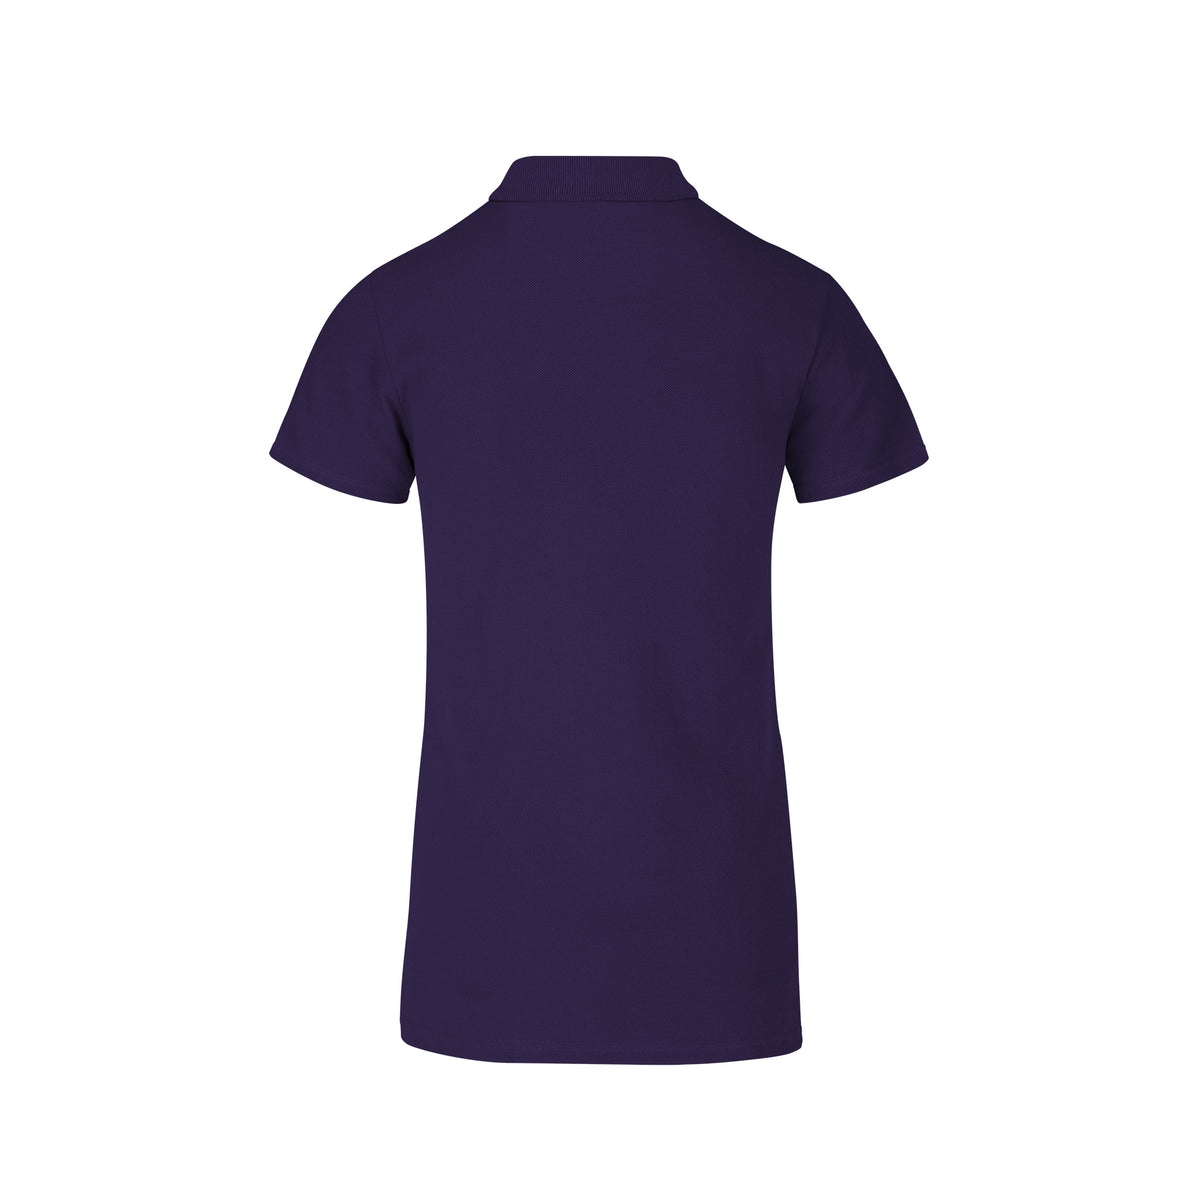 (Purple) USA Yazbek Mint Women\'s Sport – Silhouette Shirt